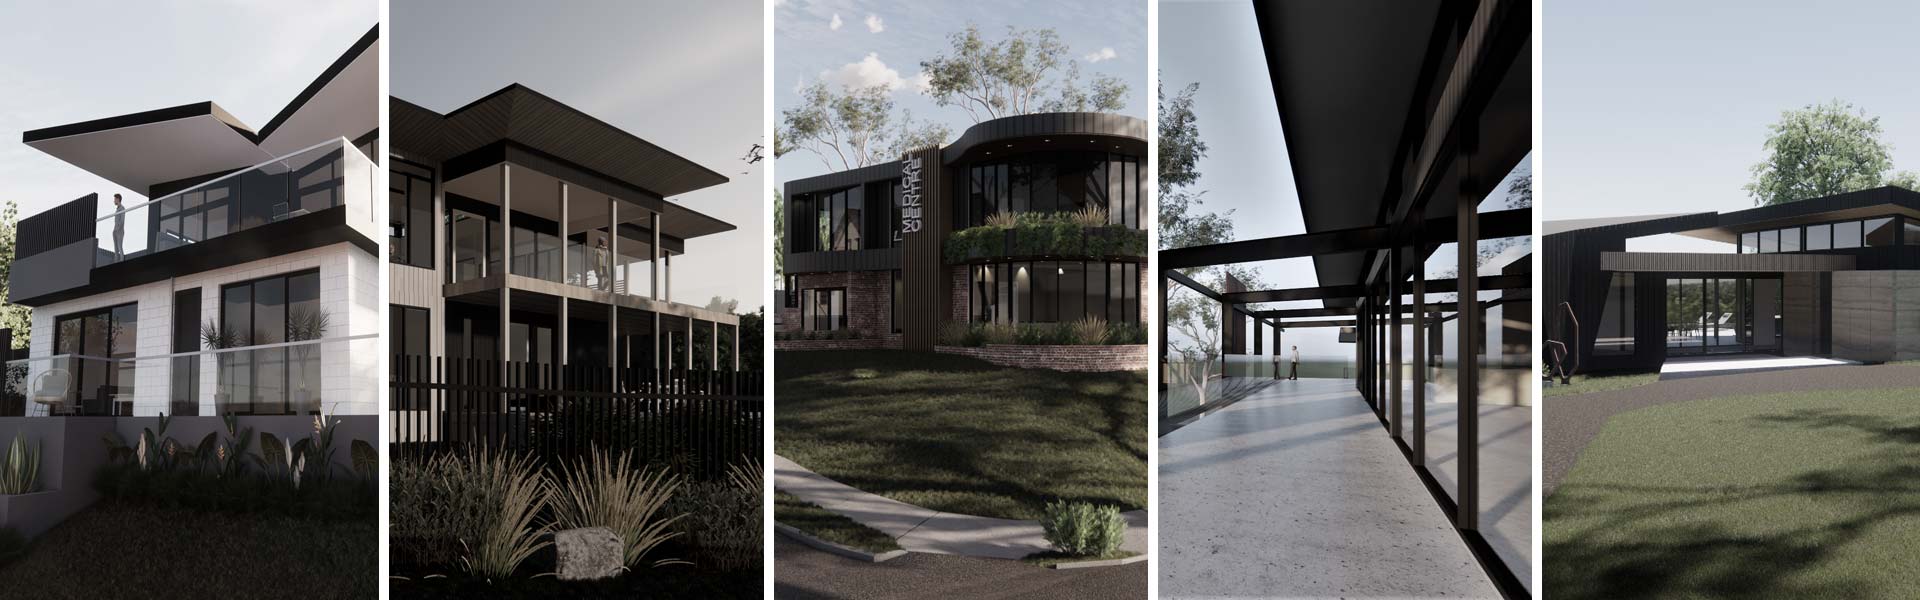 Drake Design - Gippsland Building Designers